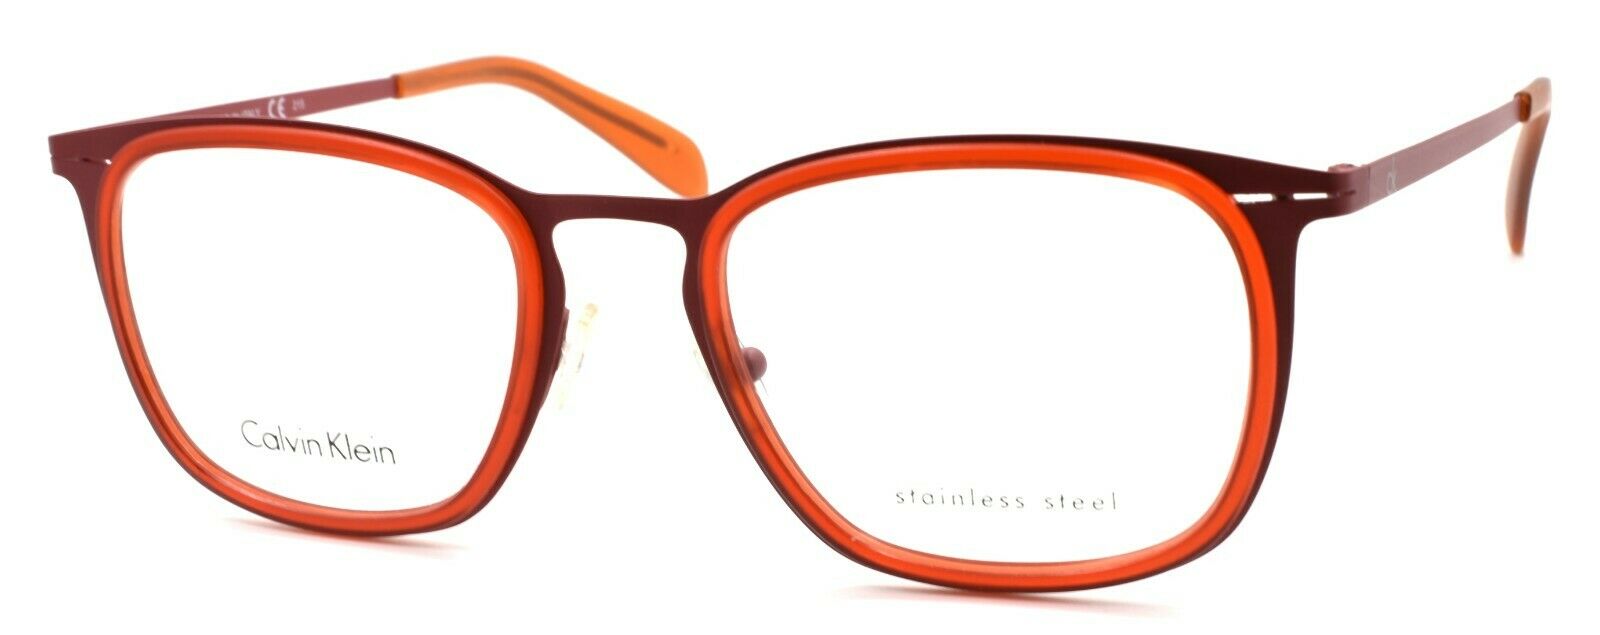 1-Calvin Klein CK5416 615 Men's Eyeglasses Frames 51-20-140 Red ITALY-750779085516-IKSpecs